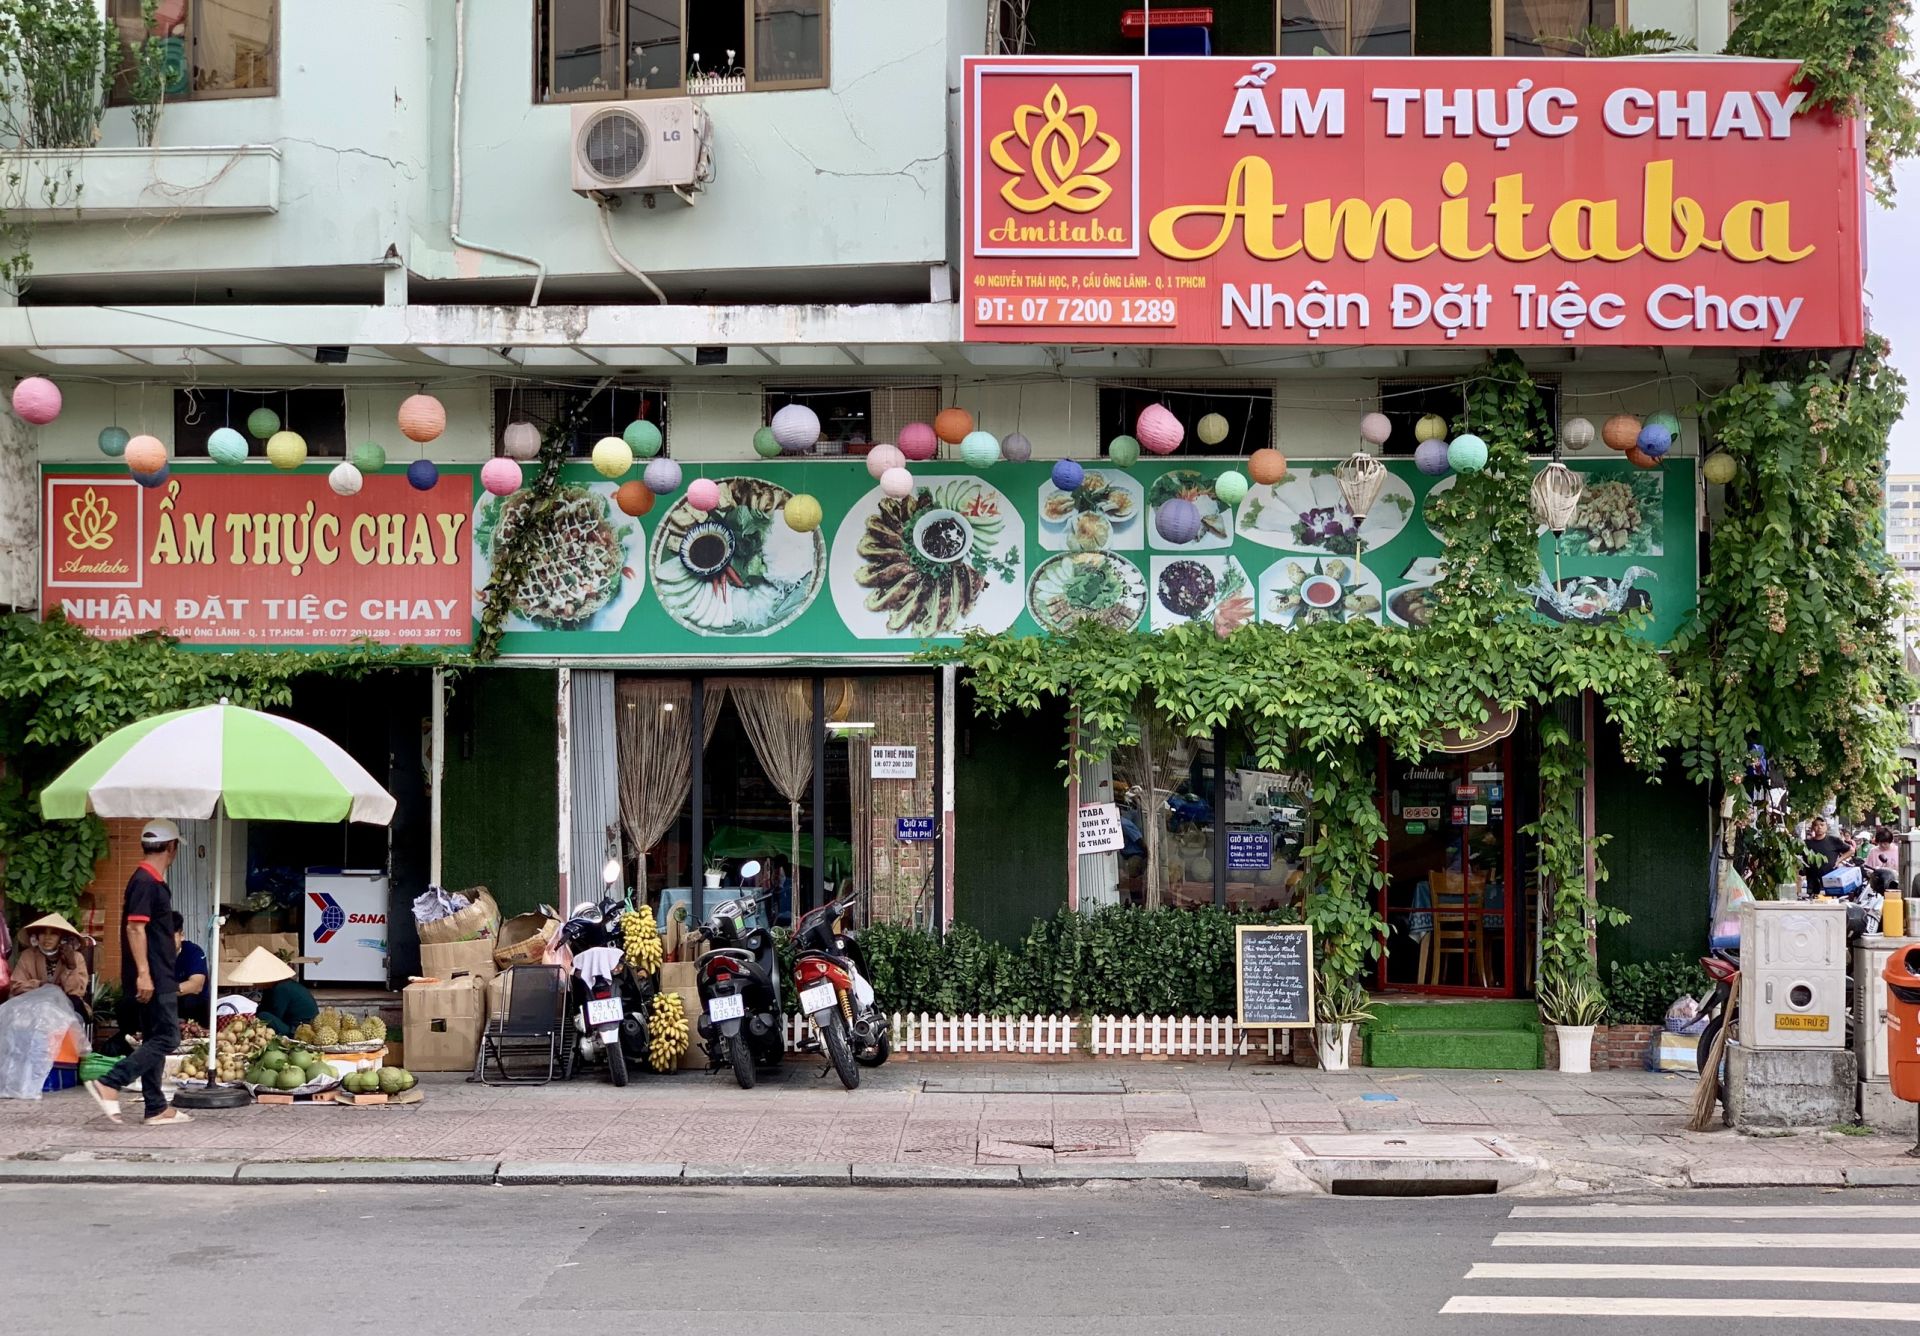 Amitaba Vegan Restaurant is located at 40 Nguyen Thai Hoc, District 1, Ho Chi Minh City.